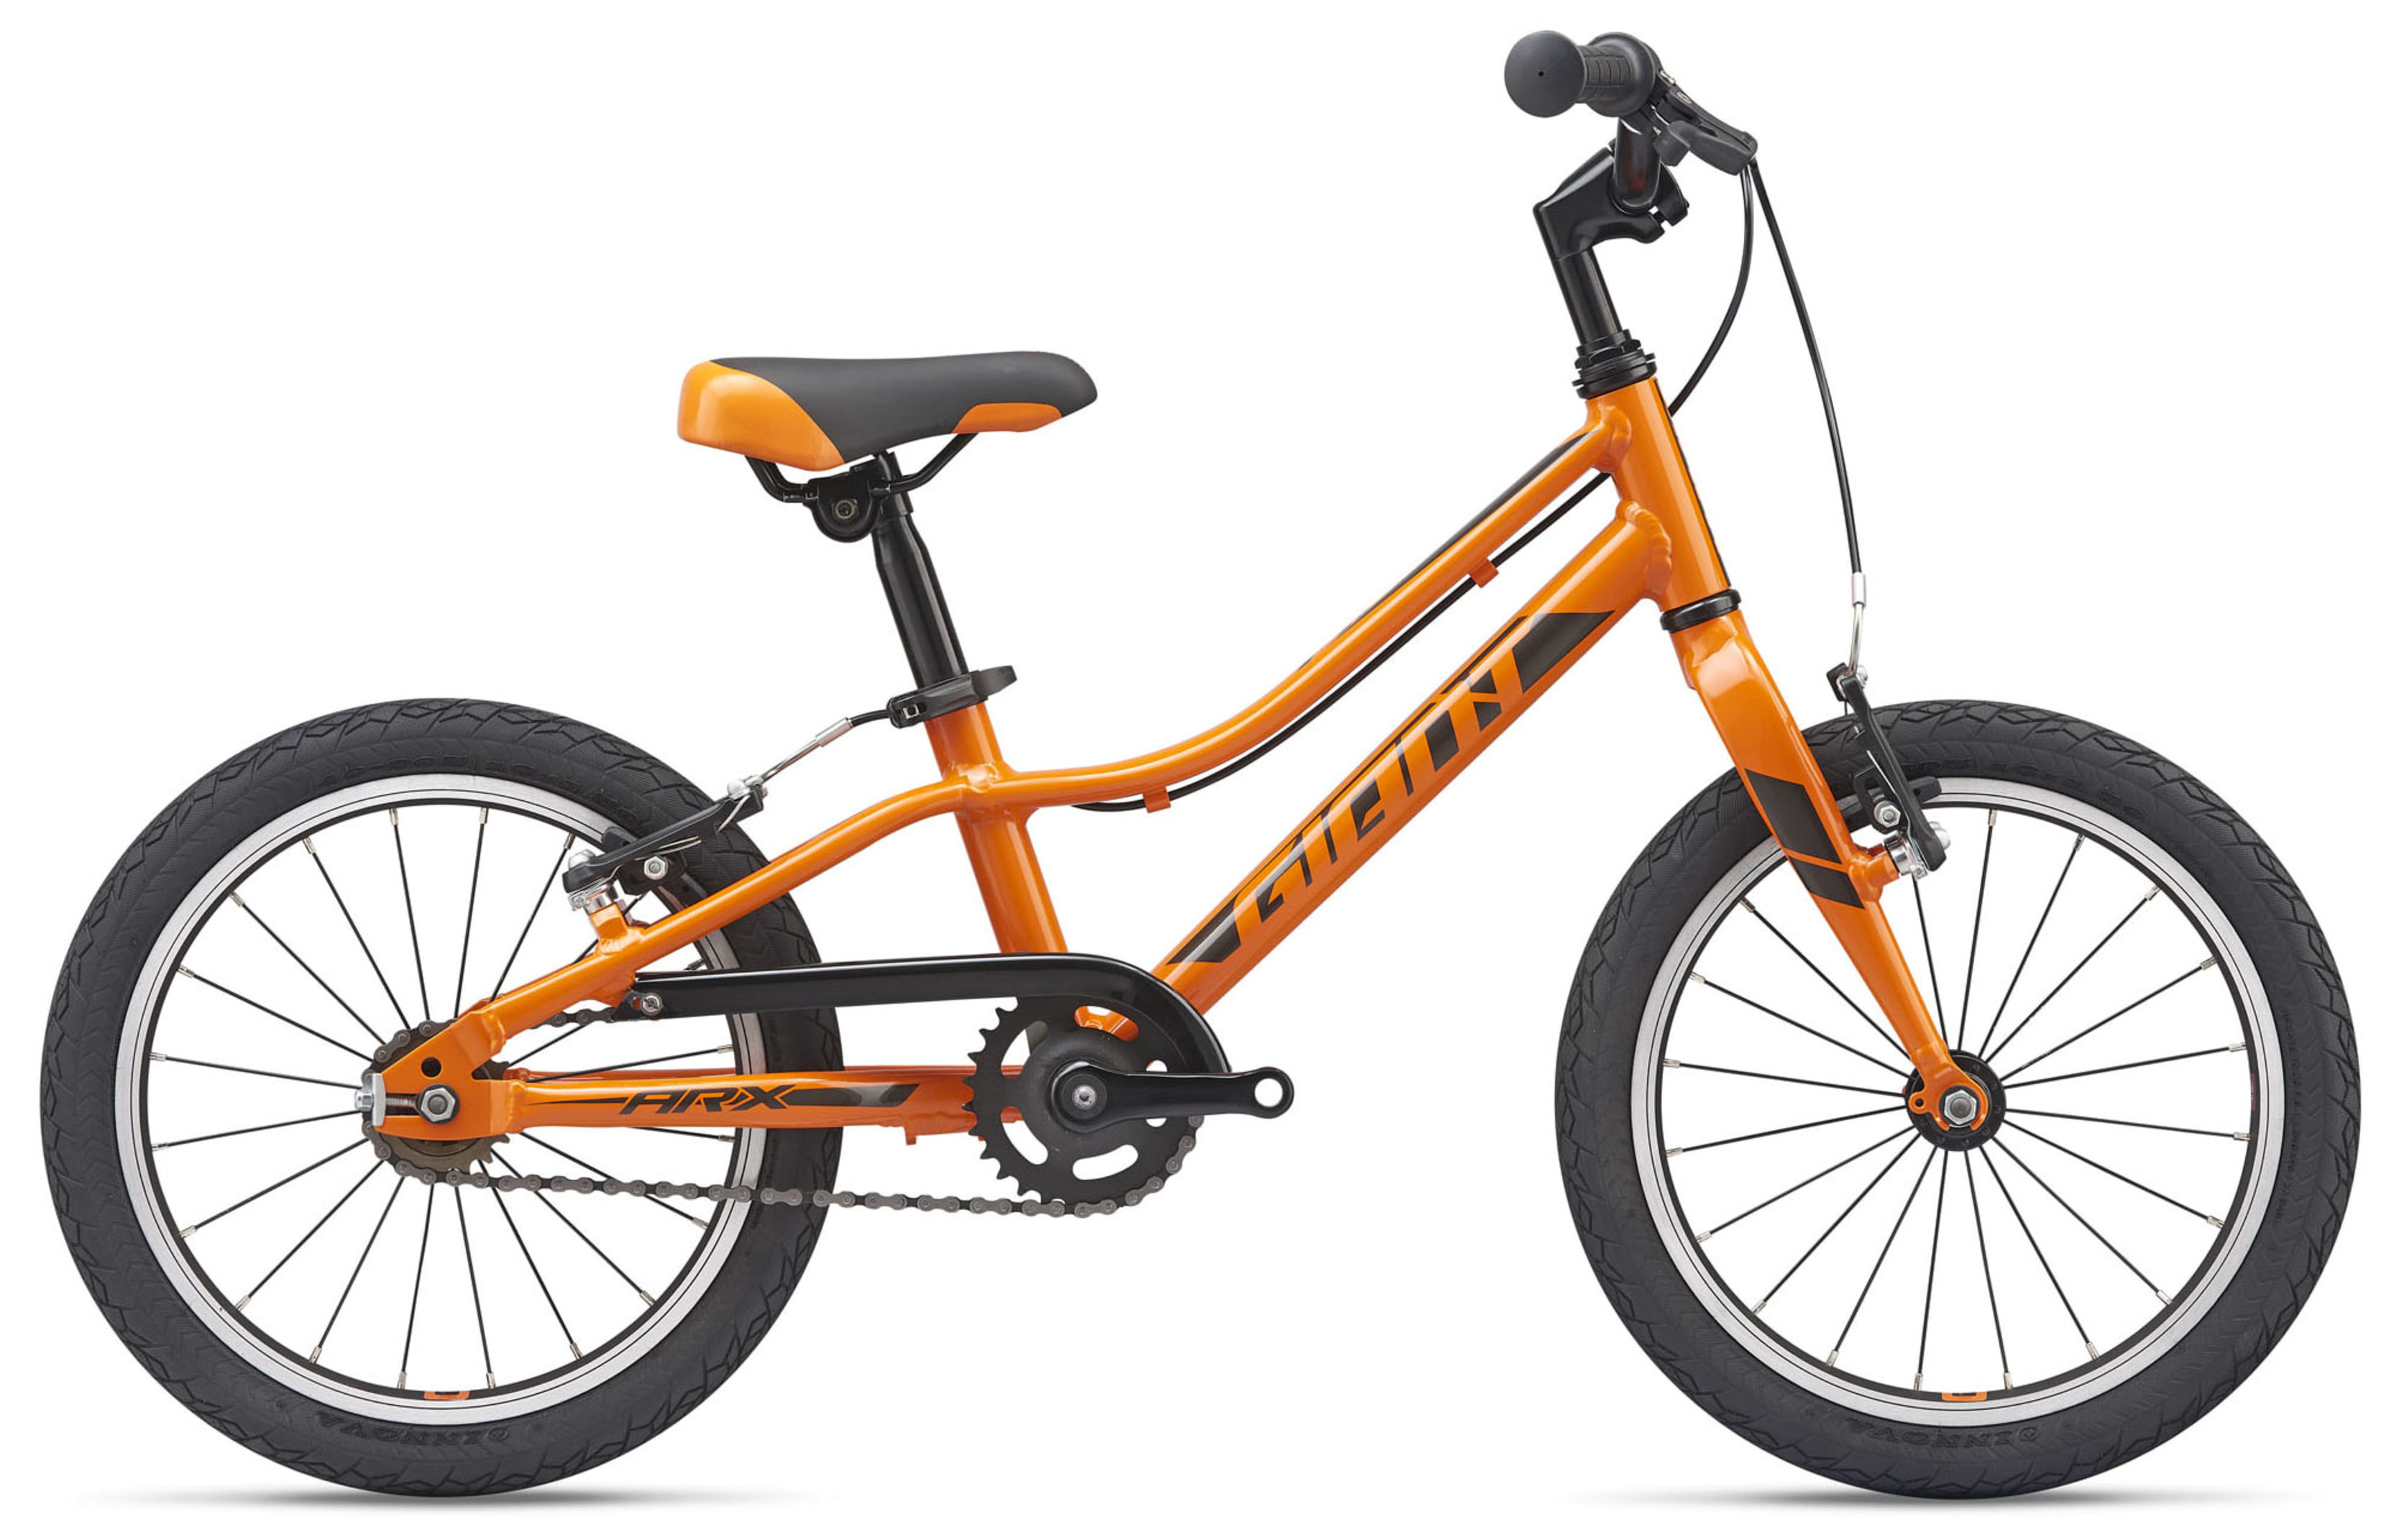  Отзывы о Детском велосипеде Giant ARX 16 F/W (2021) 2021